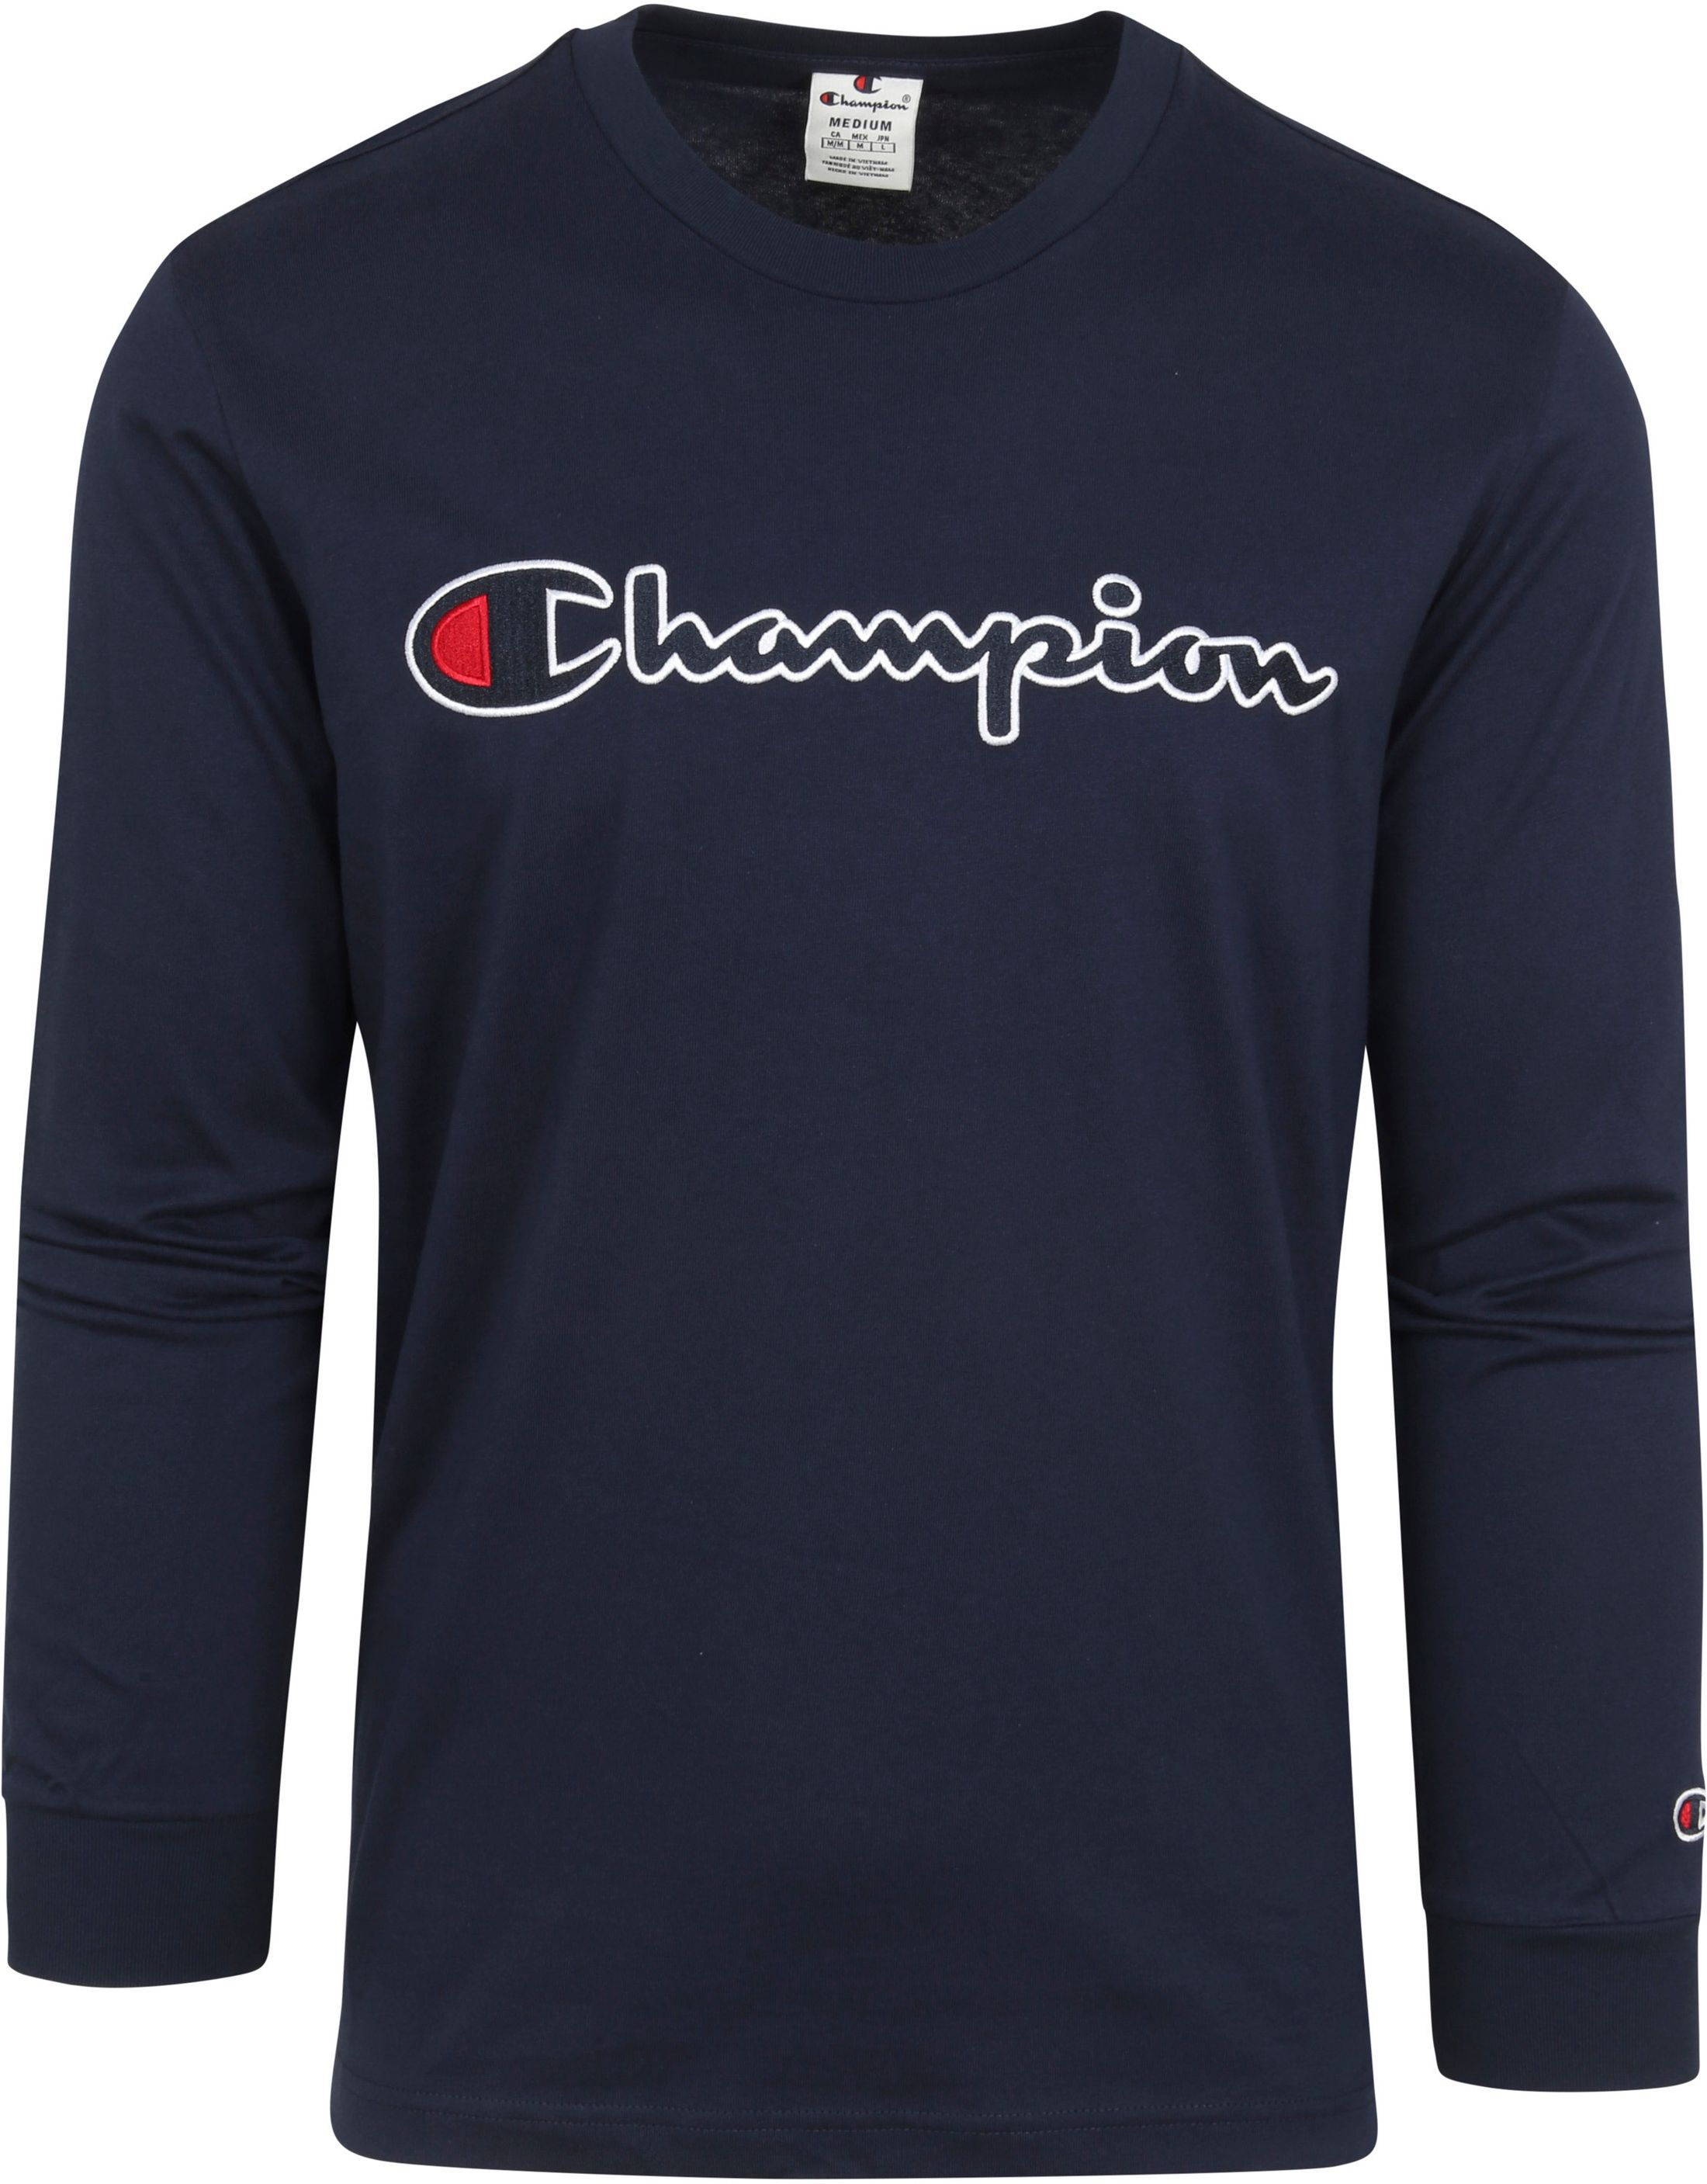 Champion Longsleeve T-Shirt Script Logo Navy Blue Dark Blue size L